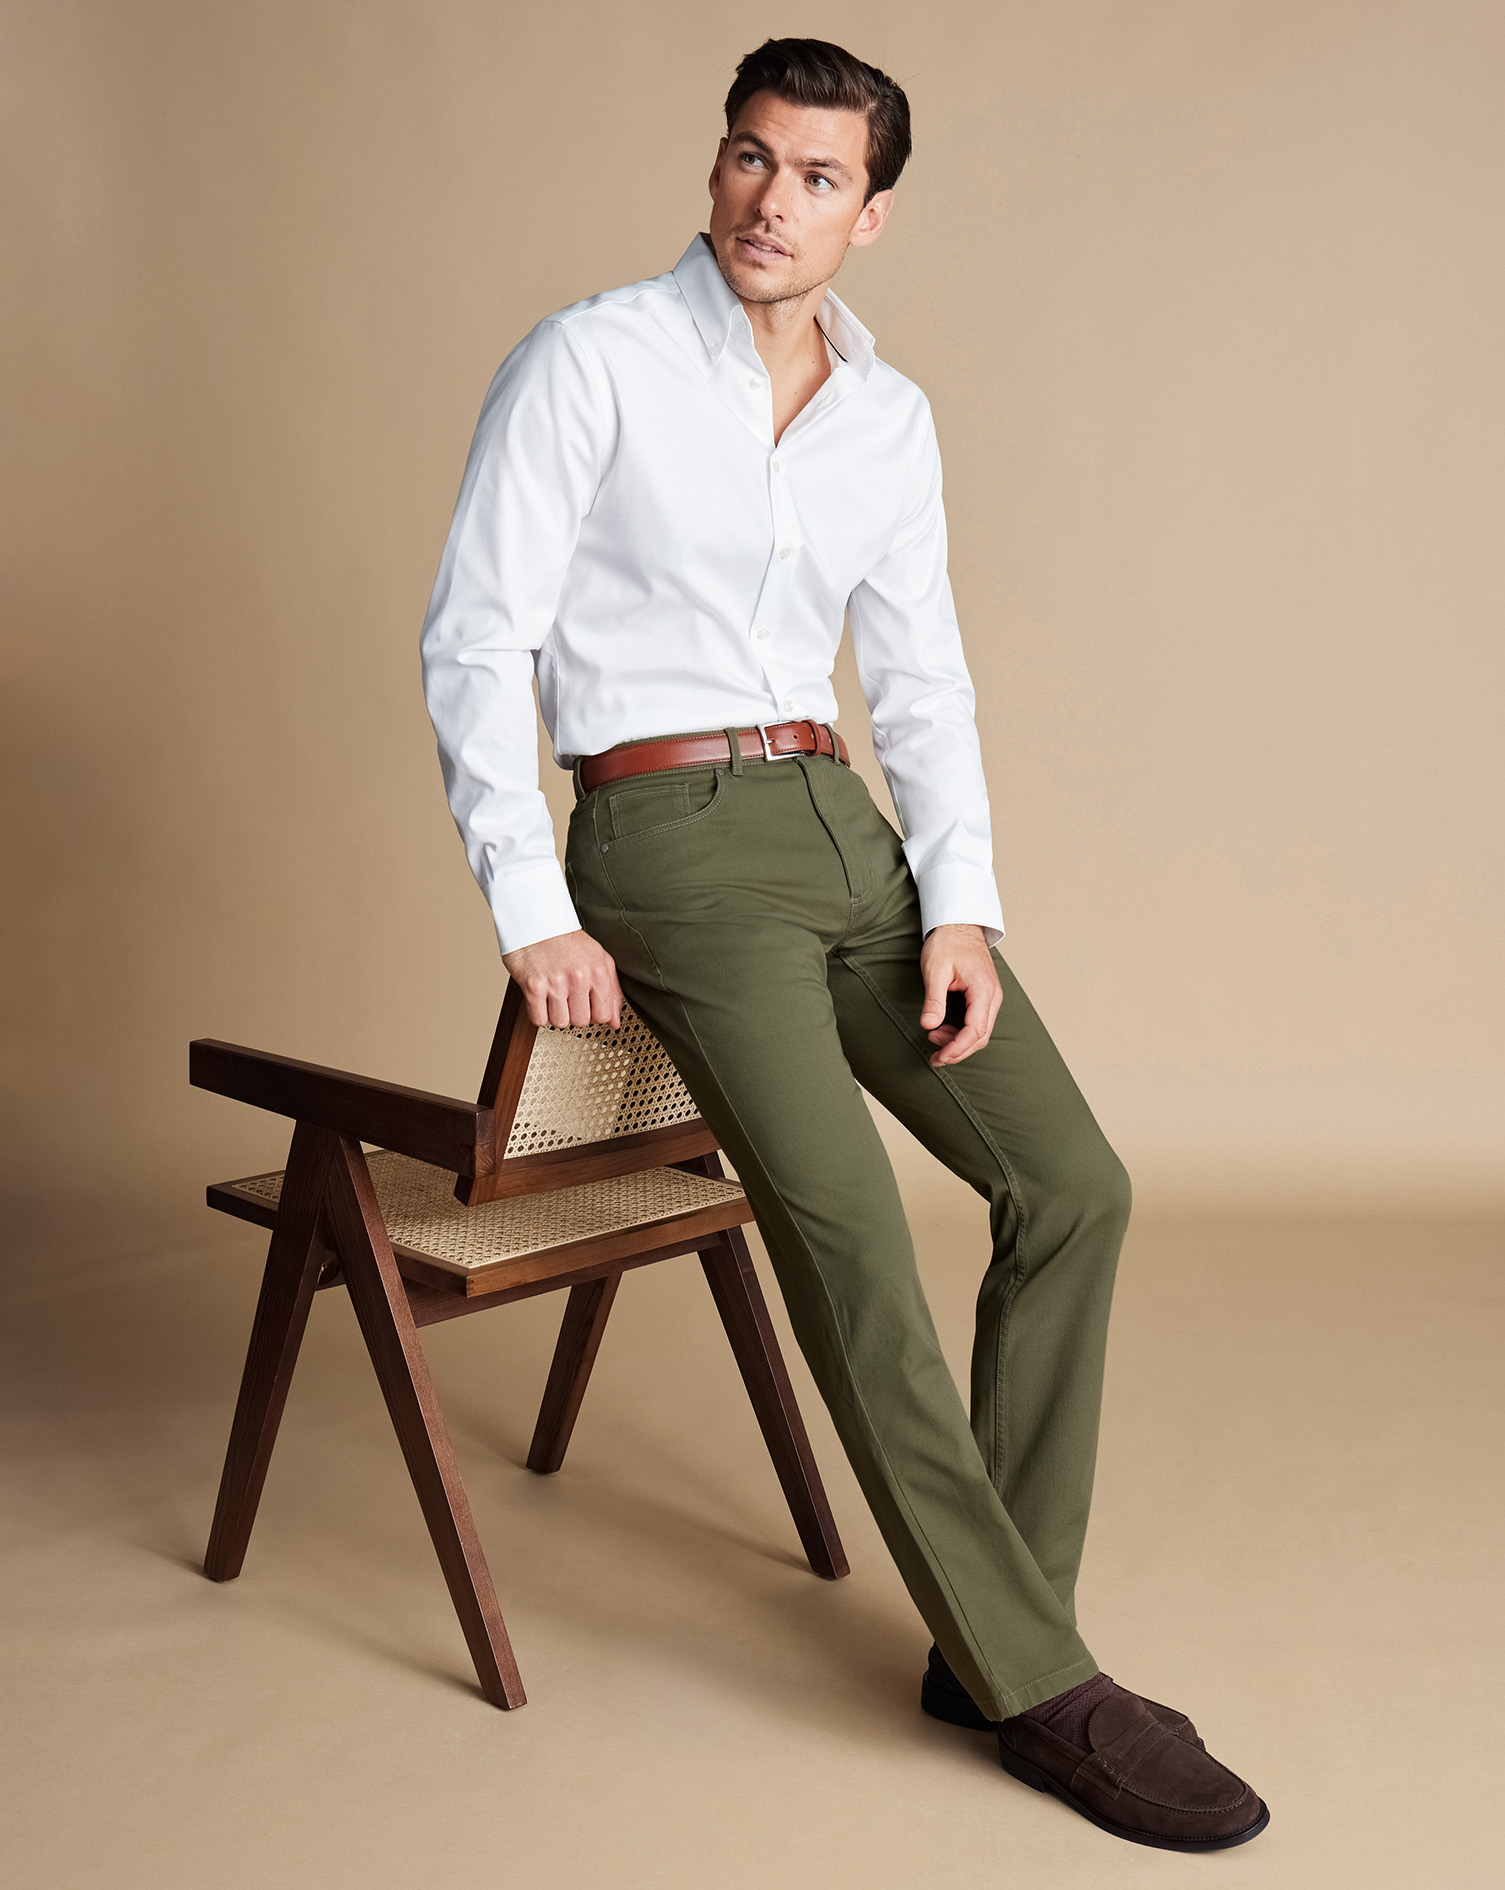 Men's Charles Tyrwhitt Twill 5 Pocket Jeans - Olive Green Size W36 L34 Cotton
